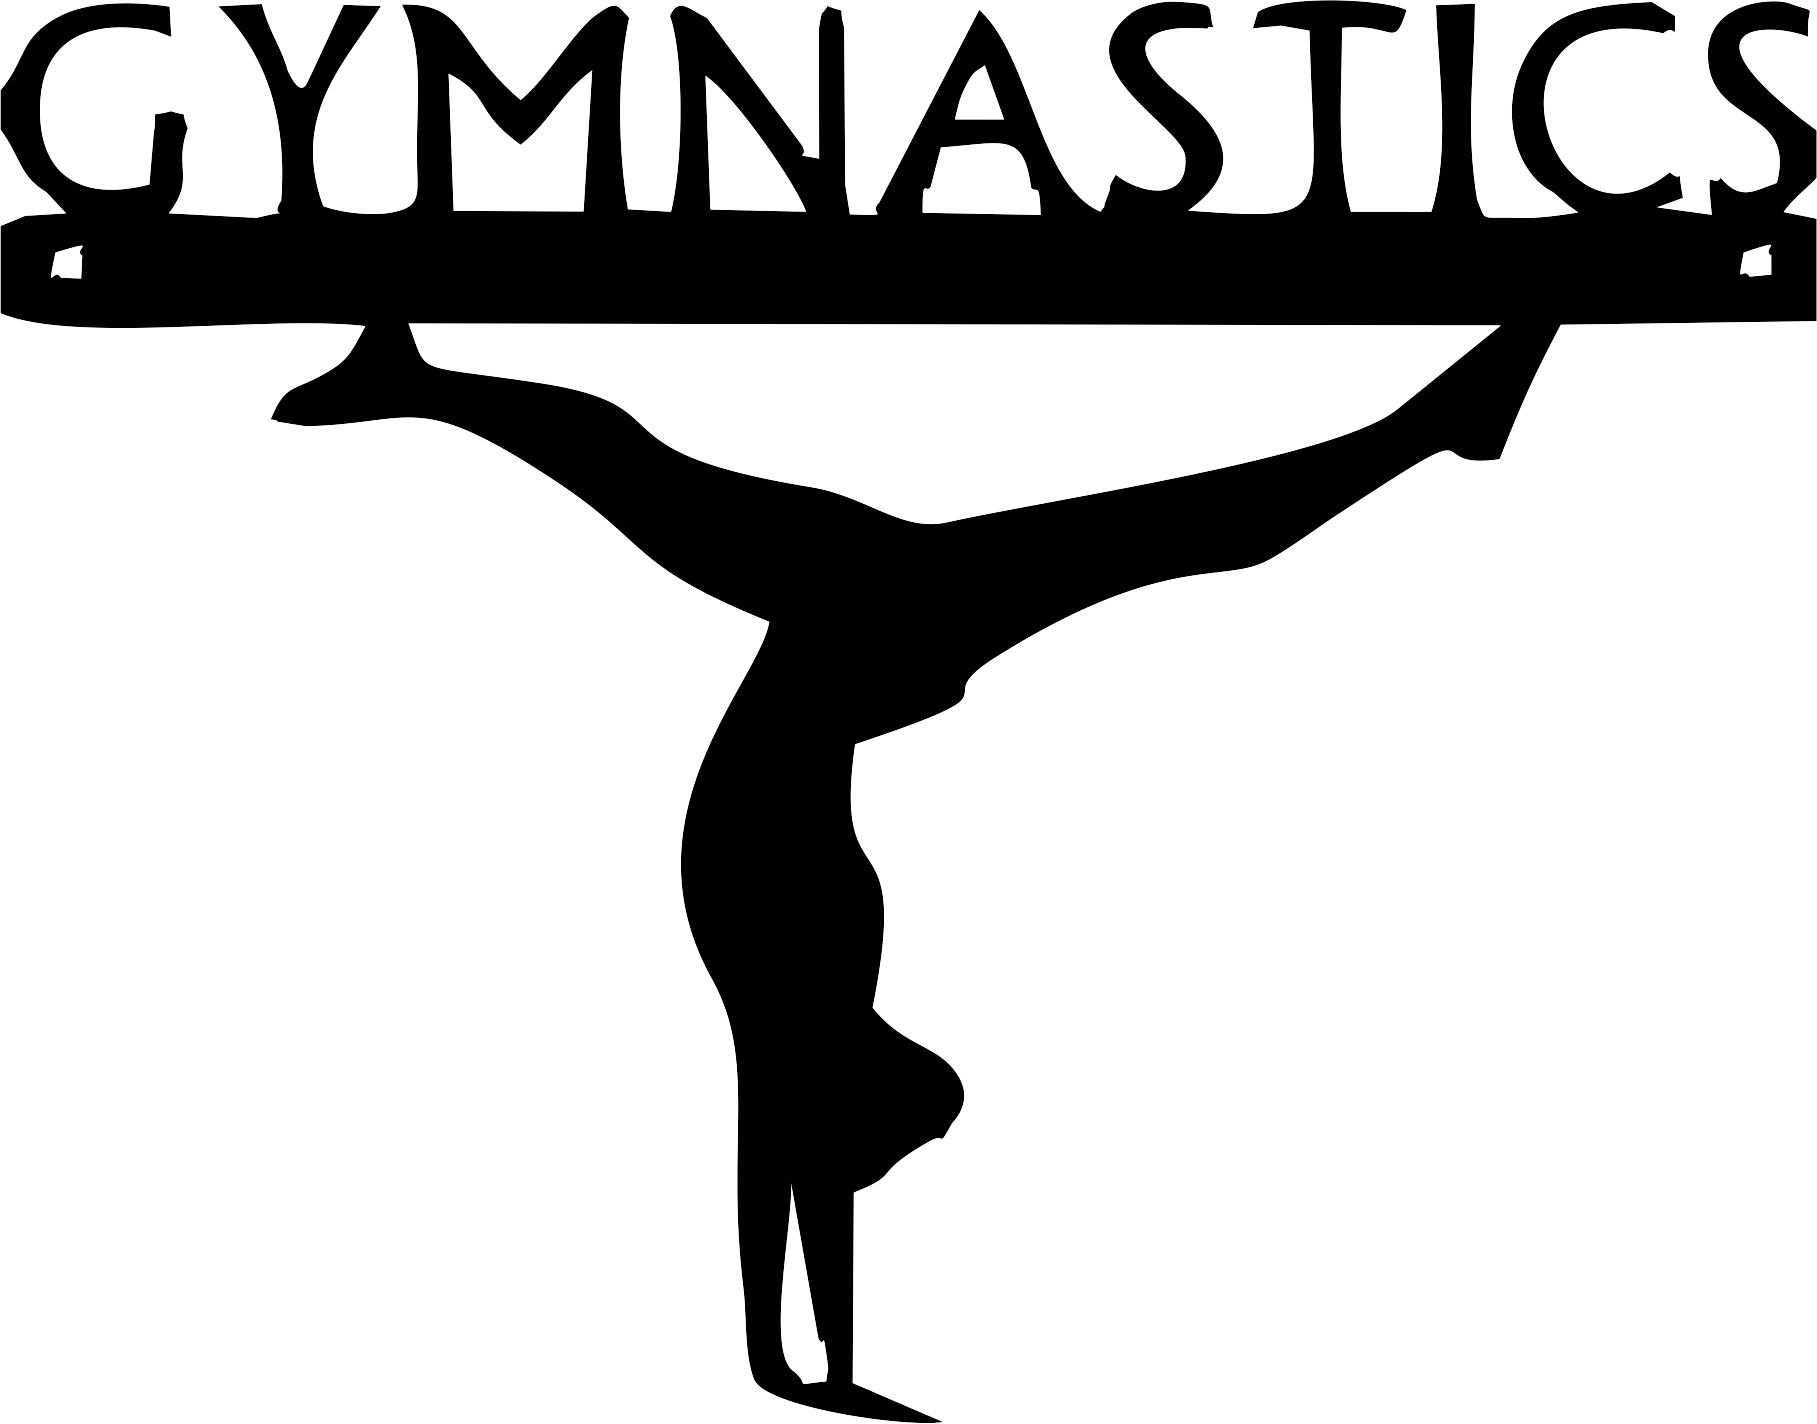 Gymnast clipart black and white. Artistic gymnastics handstand handspring